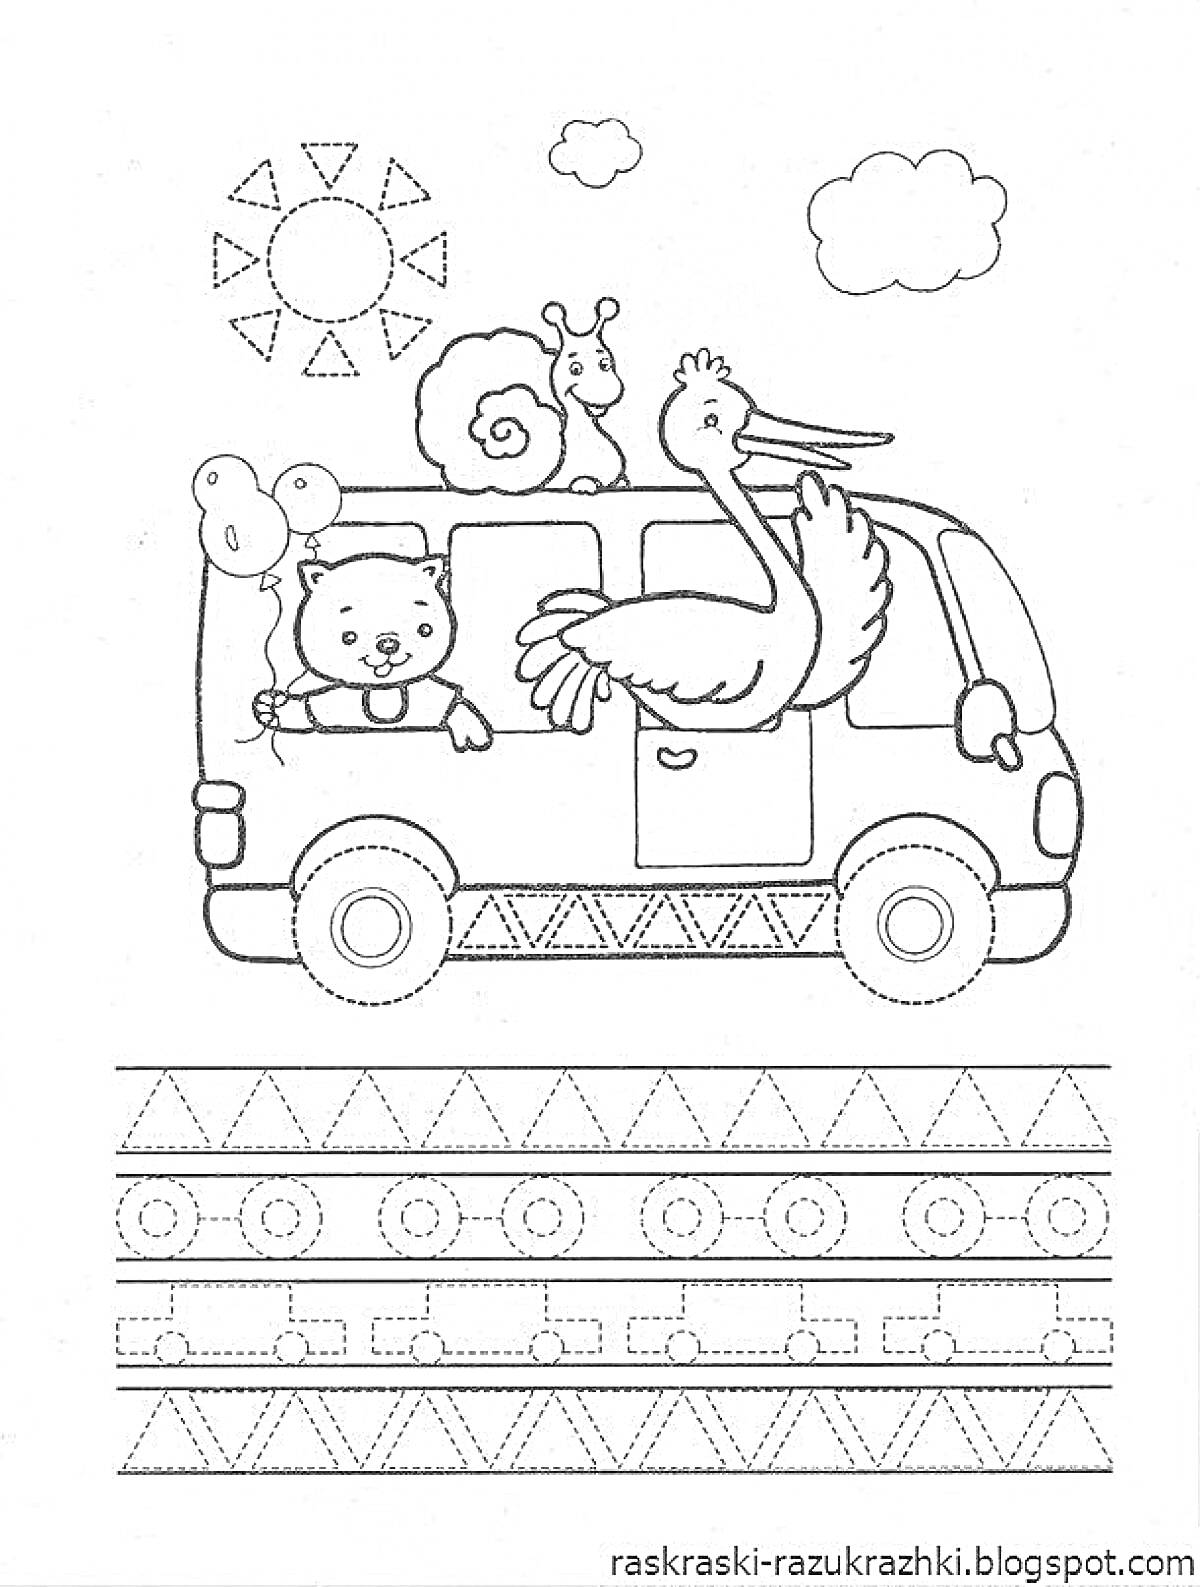 На раскраске изображено: Кот, Автобус, Аист, Улитка, Солнце, Облака, Узоры